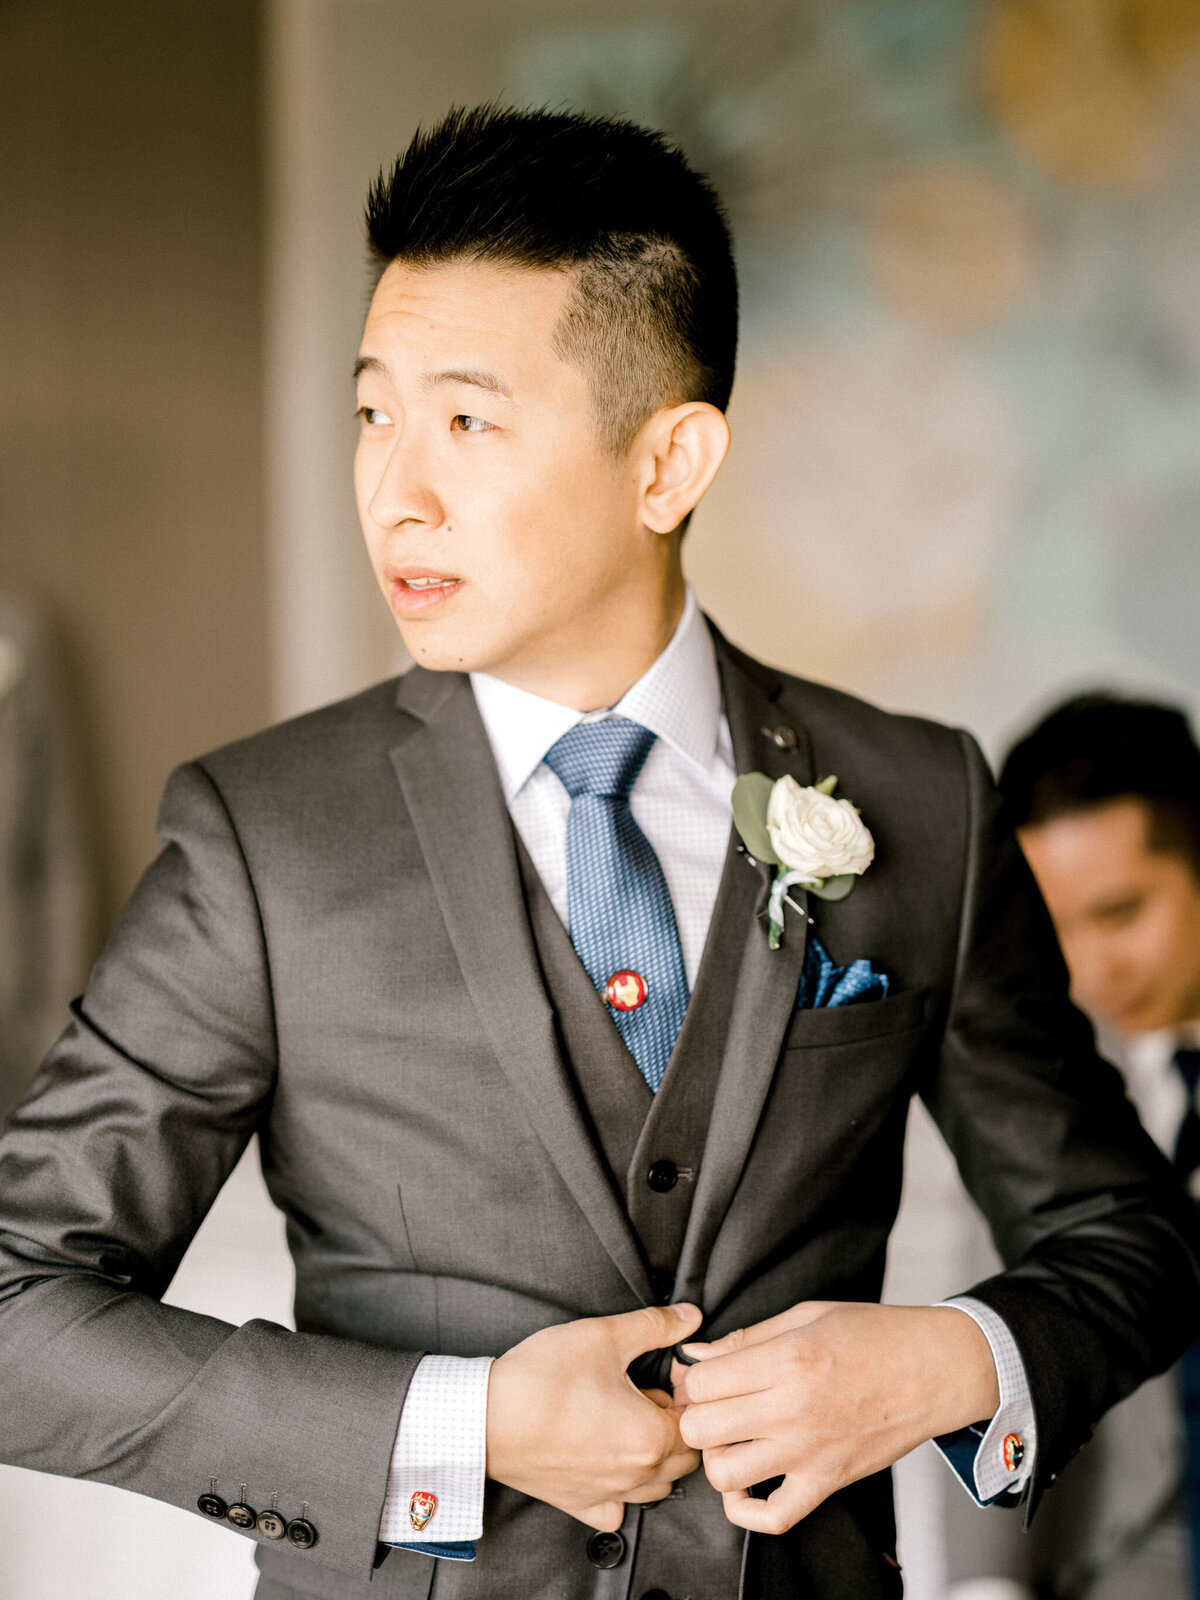 calgary-wedding-groom-getting-ready-suit